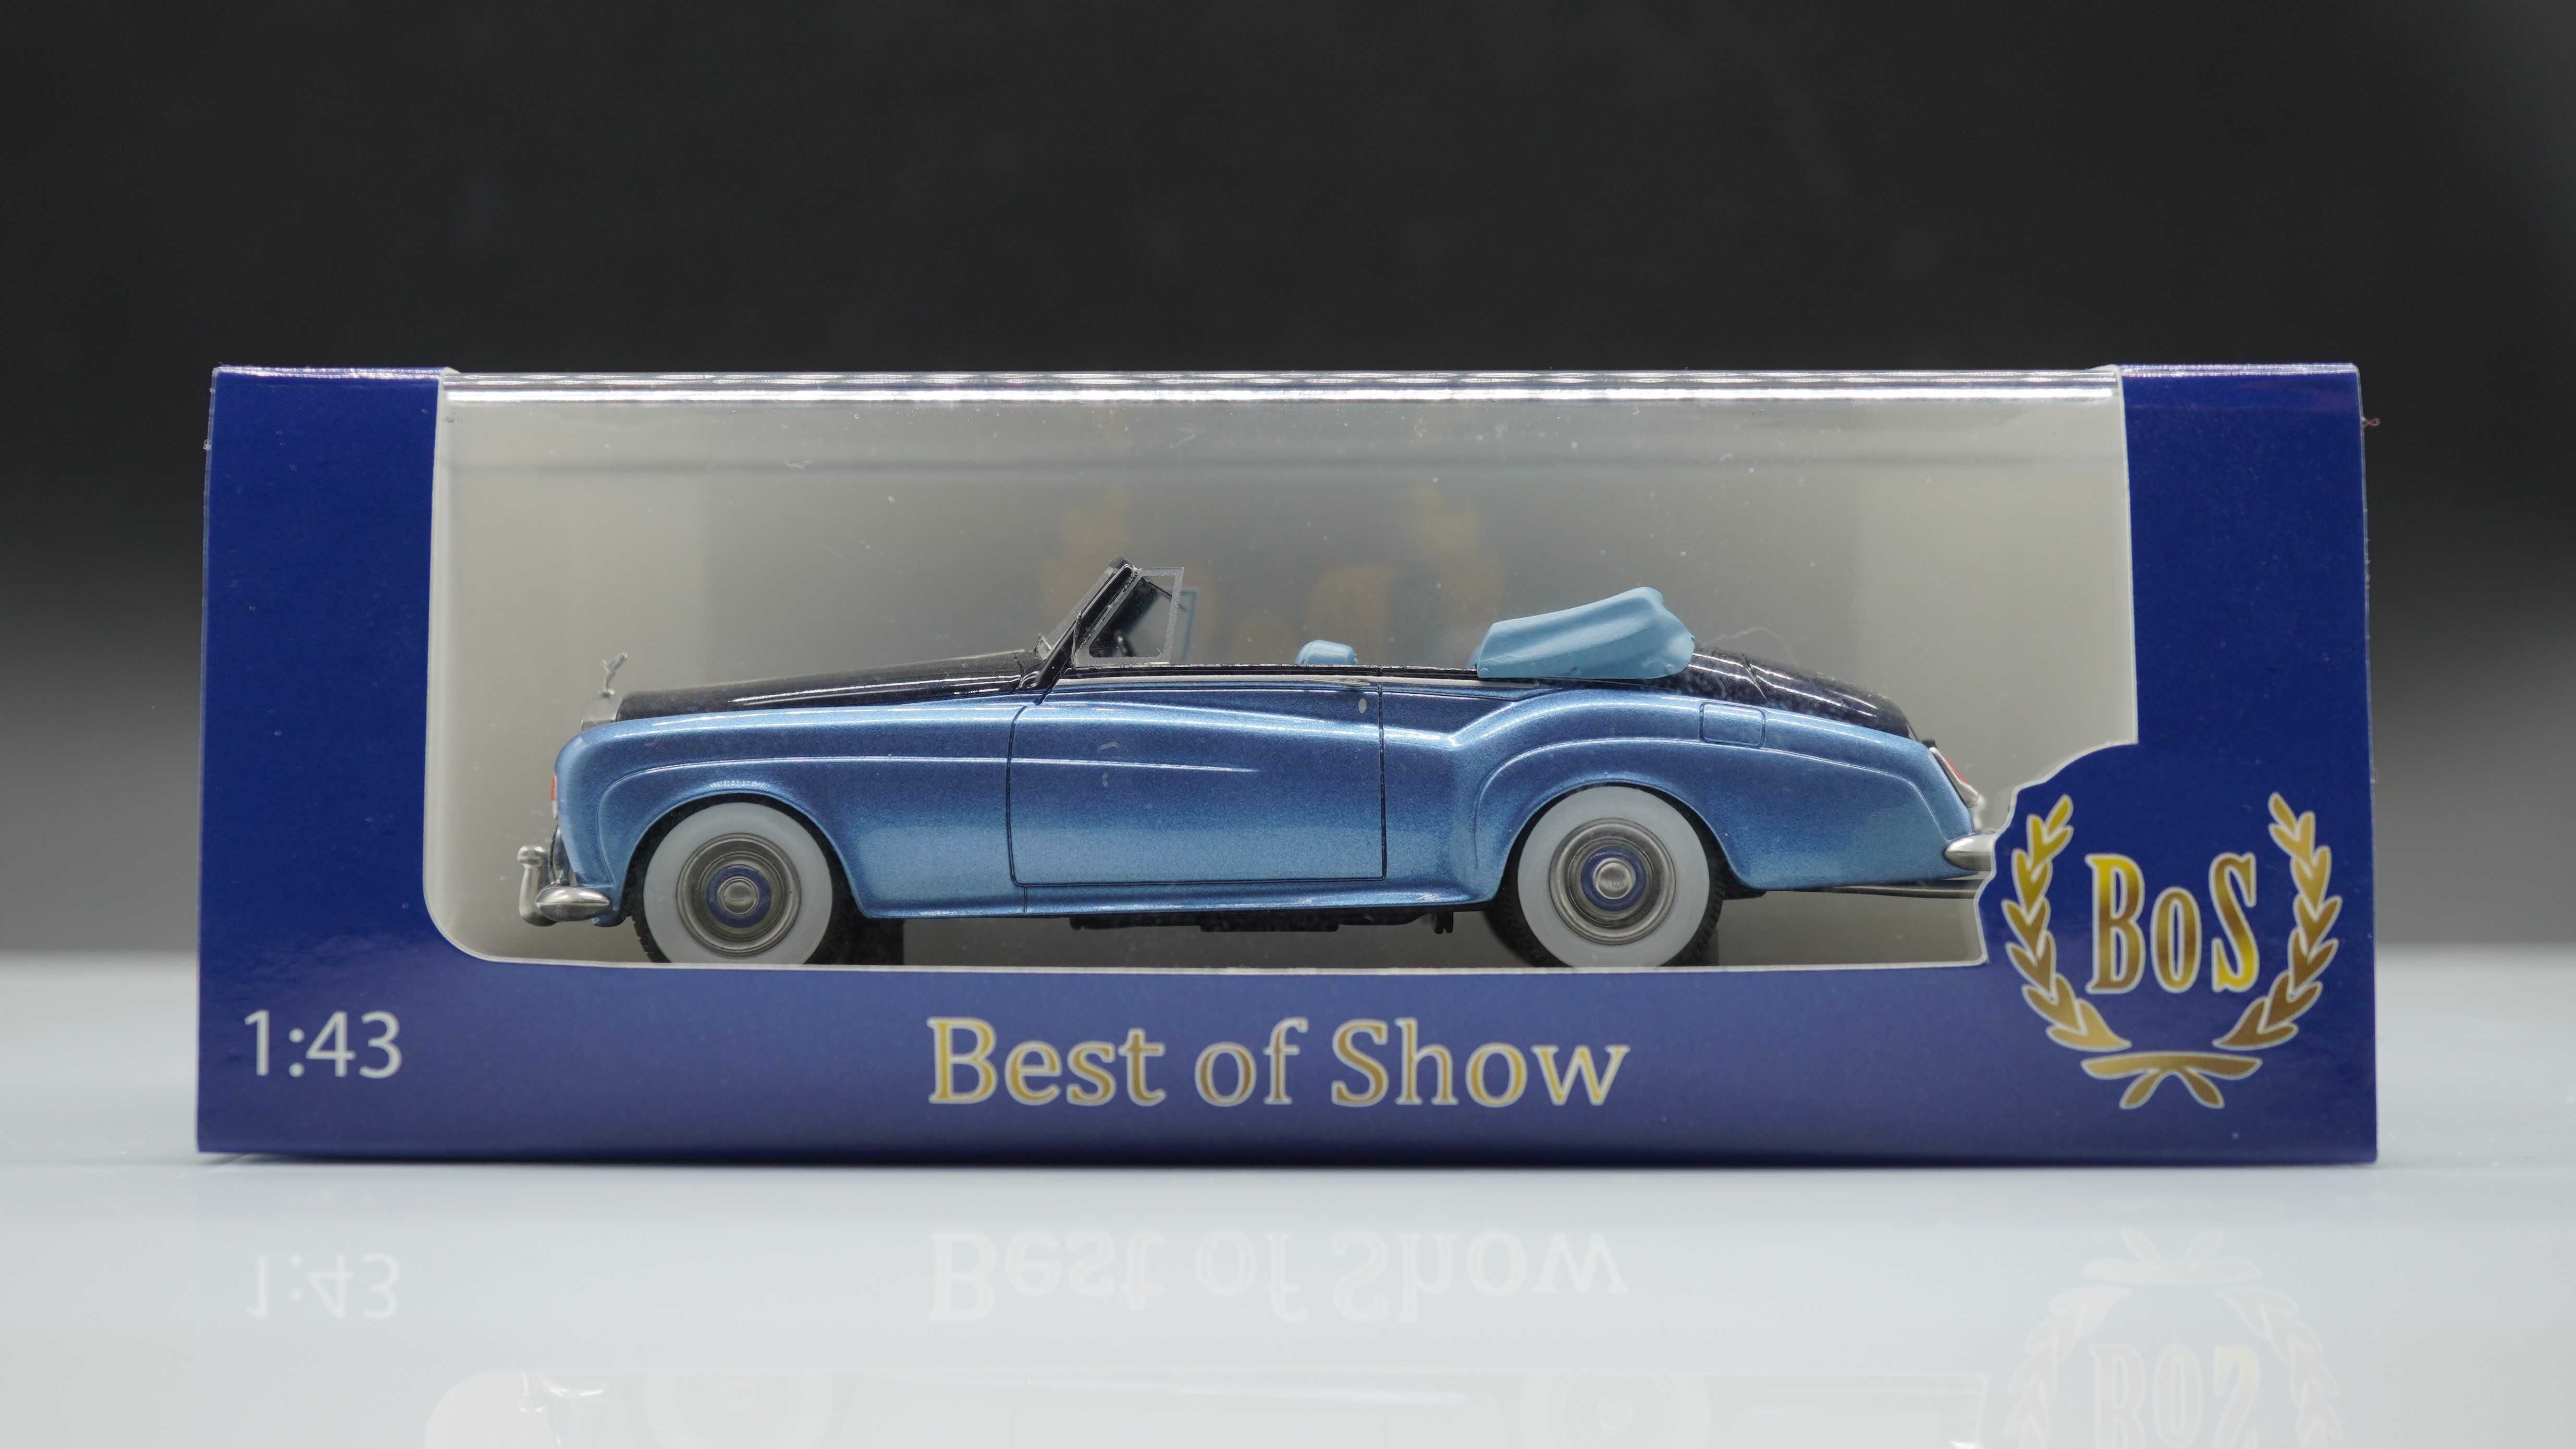 1968 Rolls-Royce Silver Cloud III convertible - Best of Show 1/43